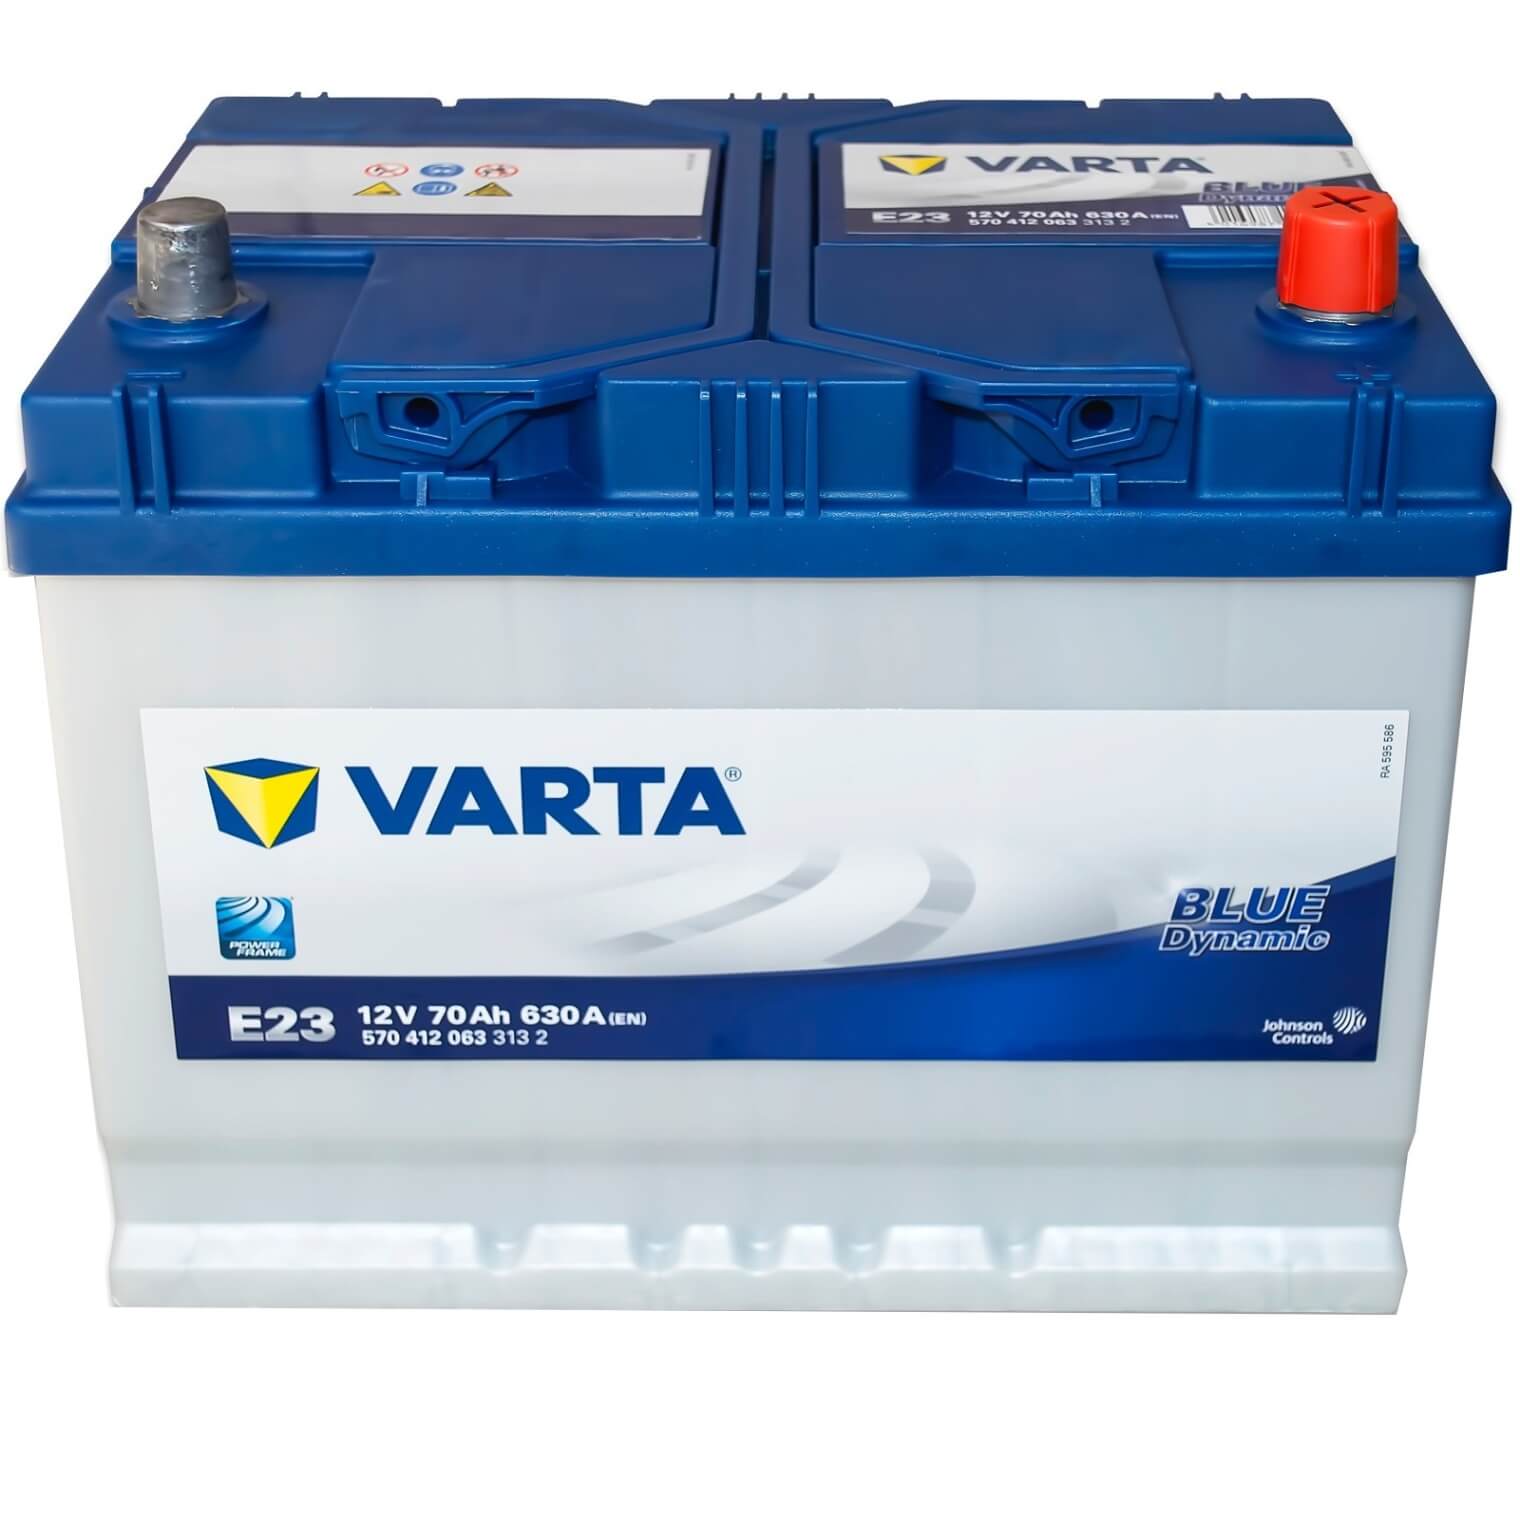 Autobatterie 12V 70Ah Varta E23 Blue Dynamic 5704120633132